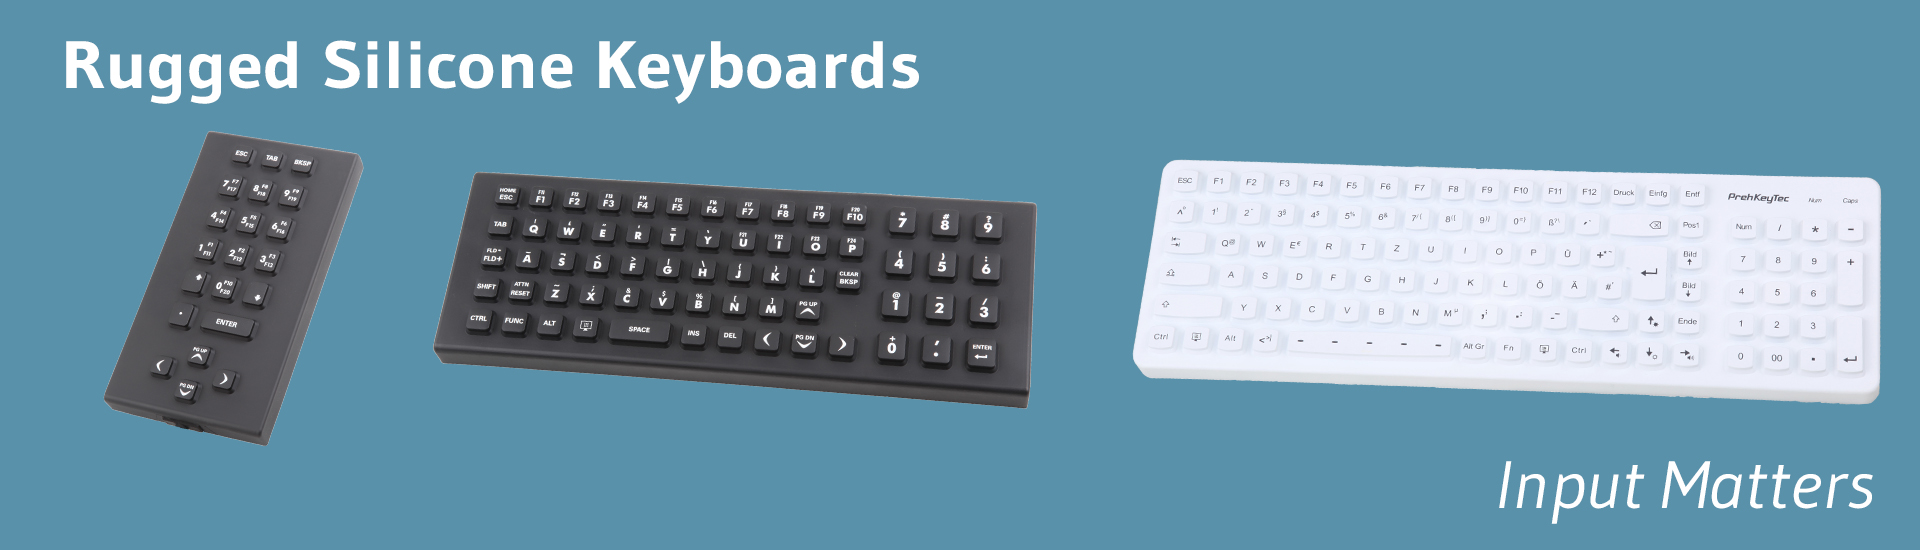 Rugged Silicone Keyboards